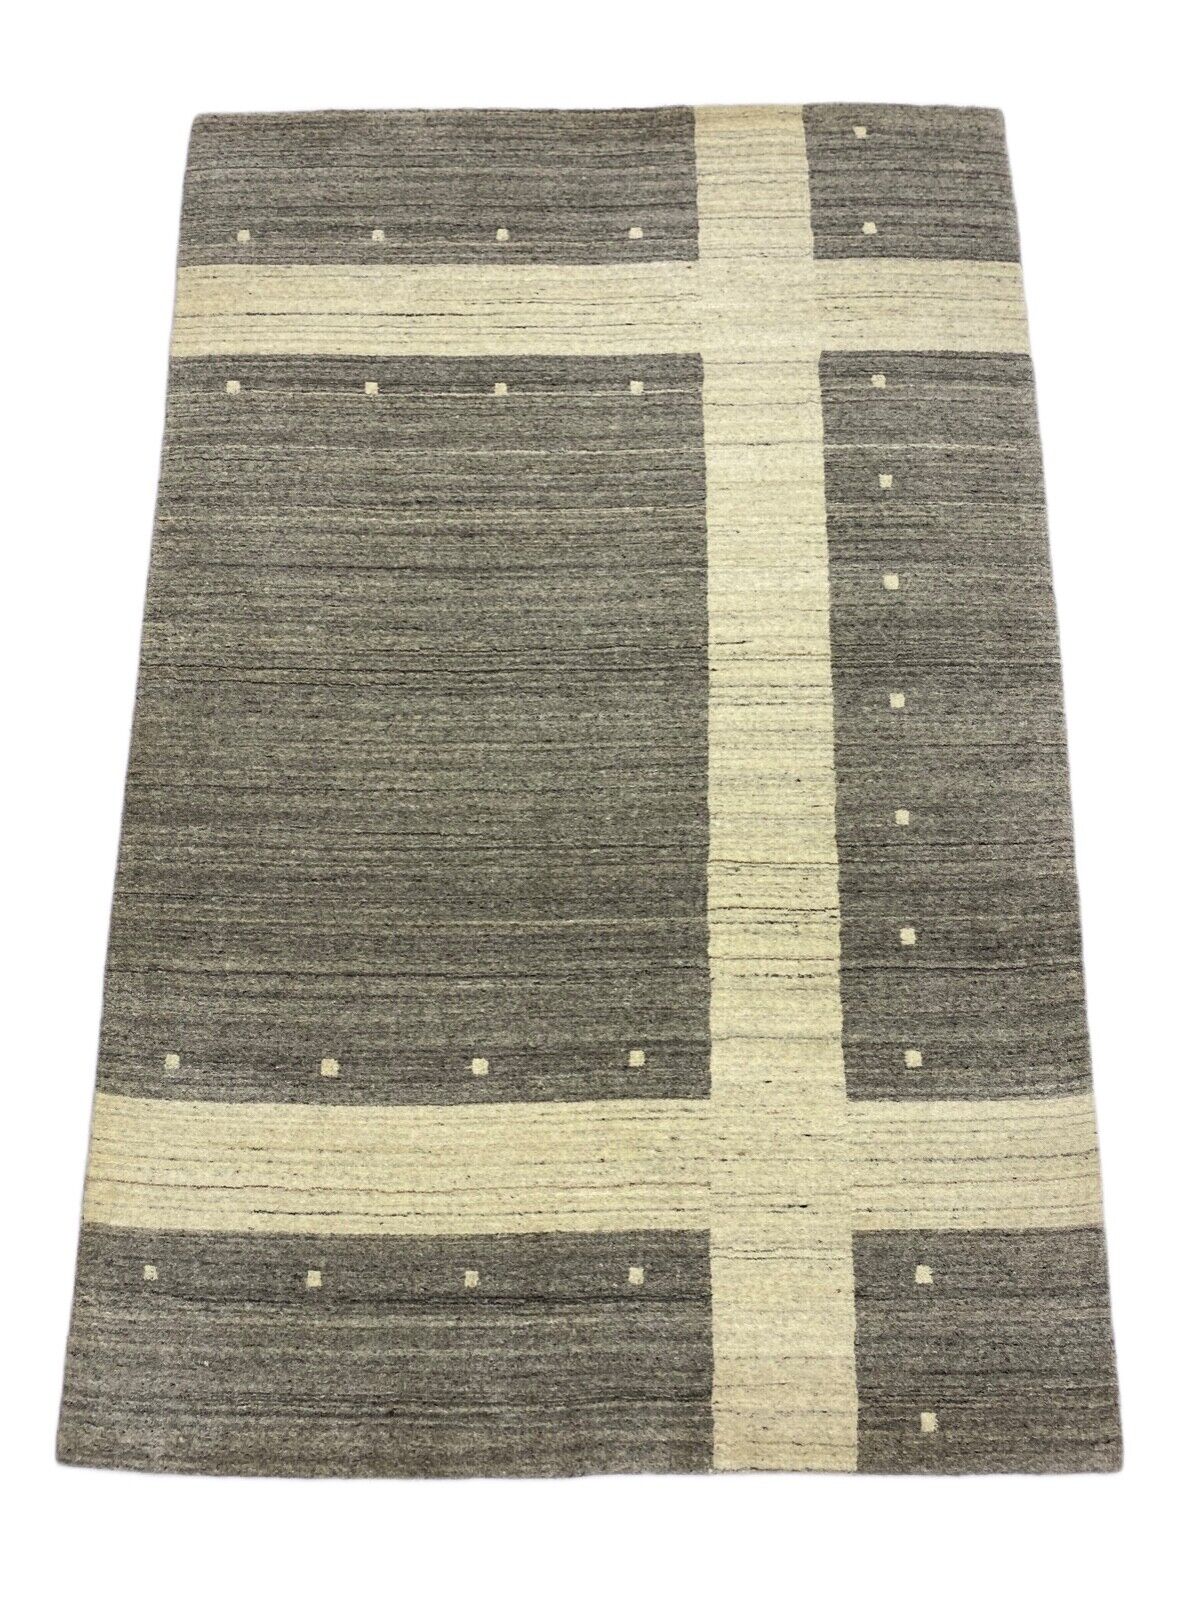 Teppich Gabbeh Beige Grau 100% Wolle lori Handgewebt 120x180 cm S83